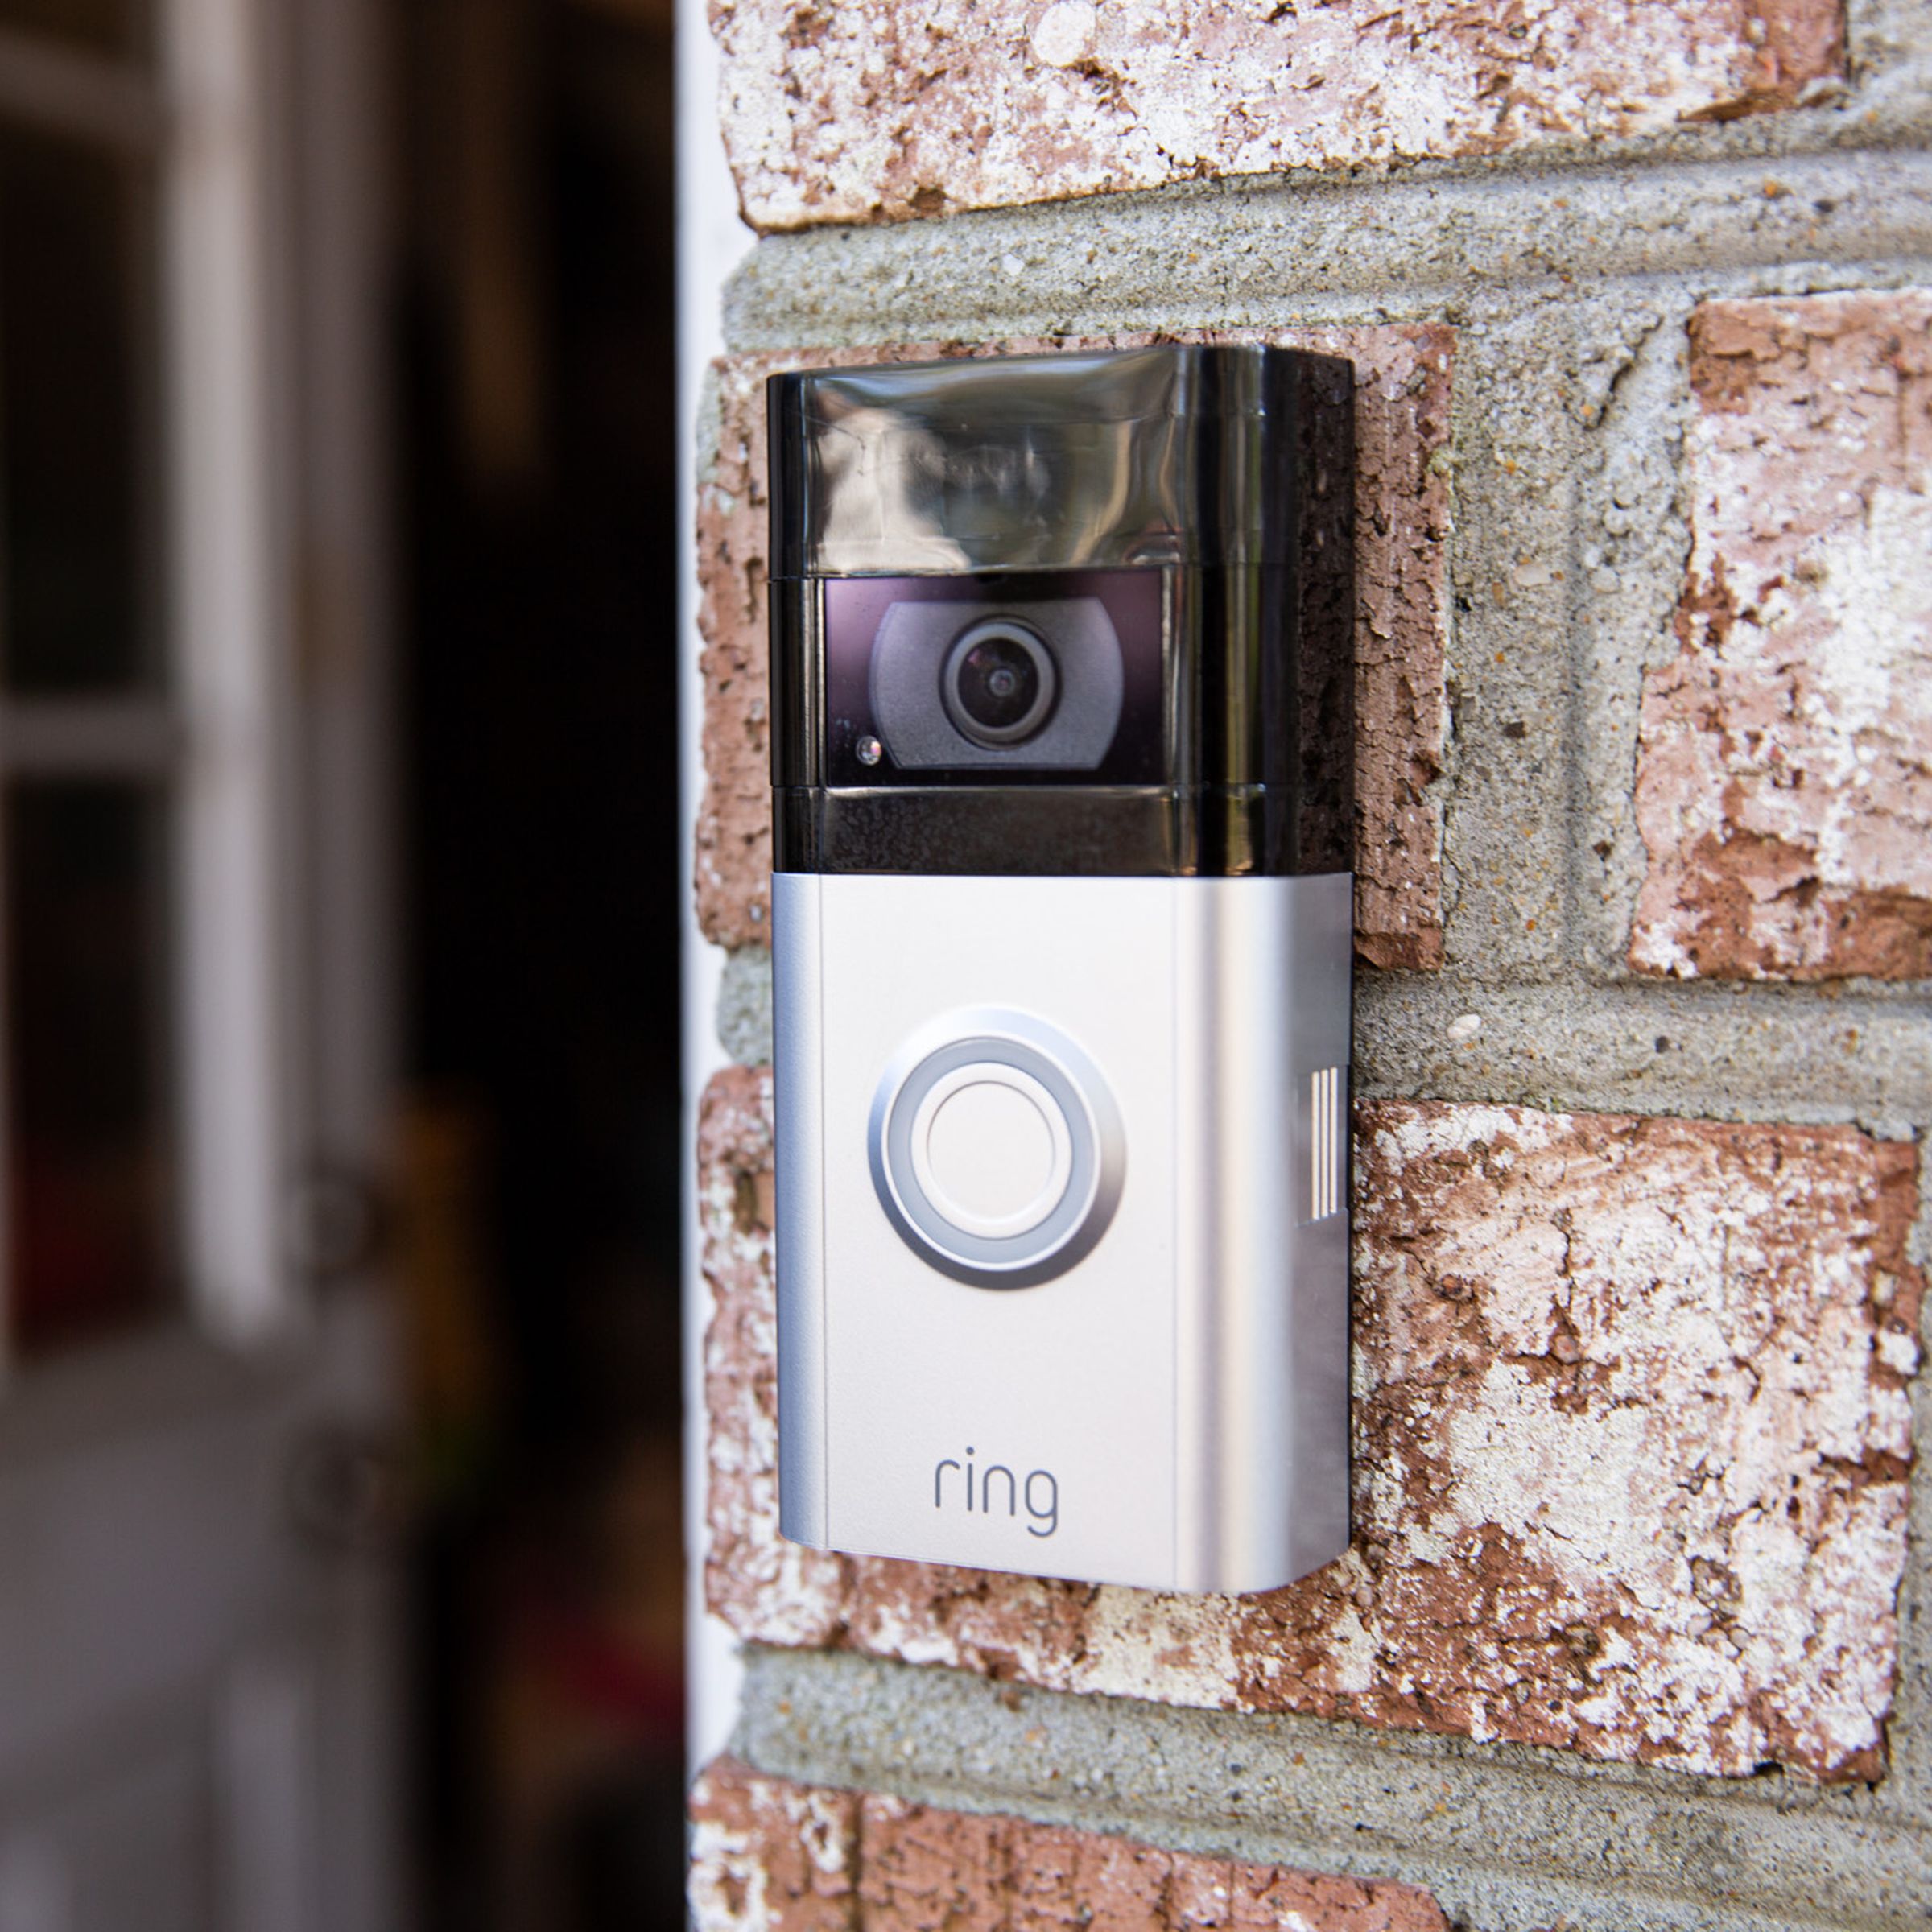 Ring Video Doorbell 4 on a brick wall